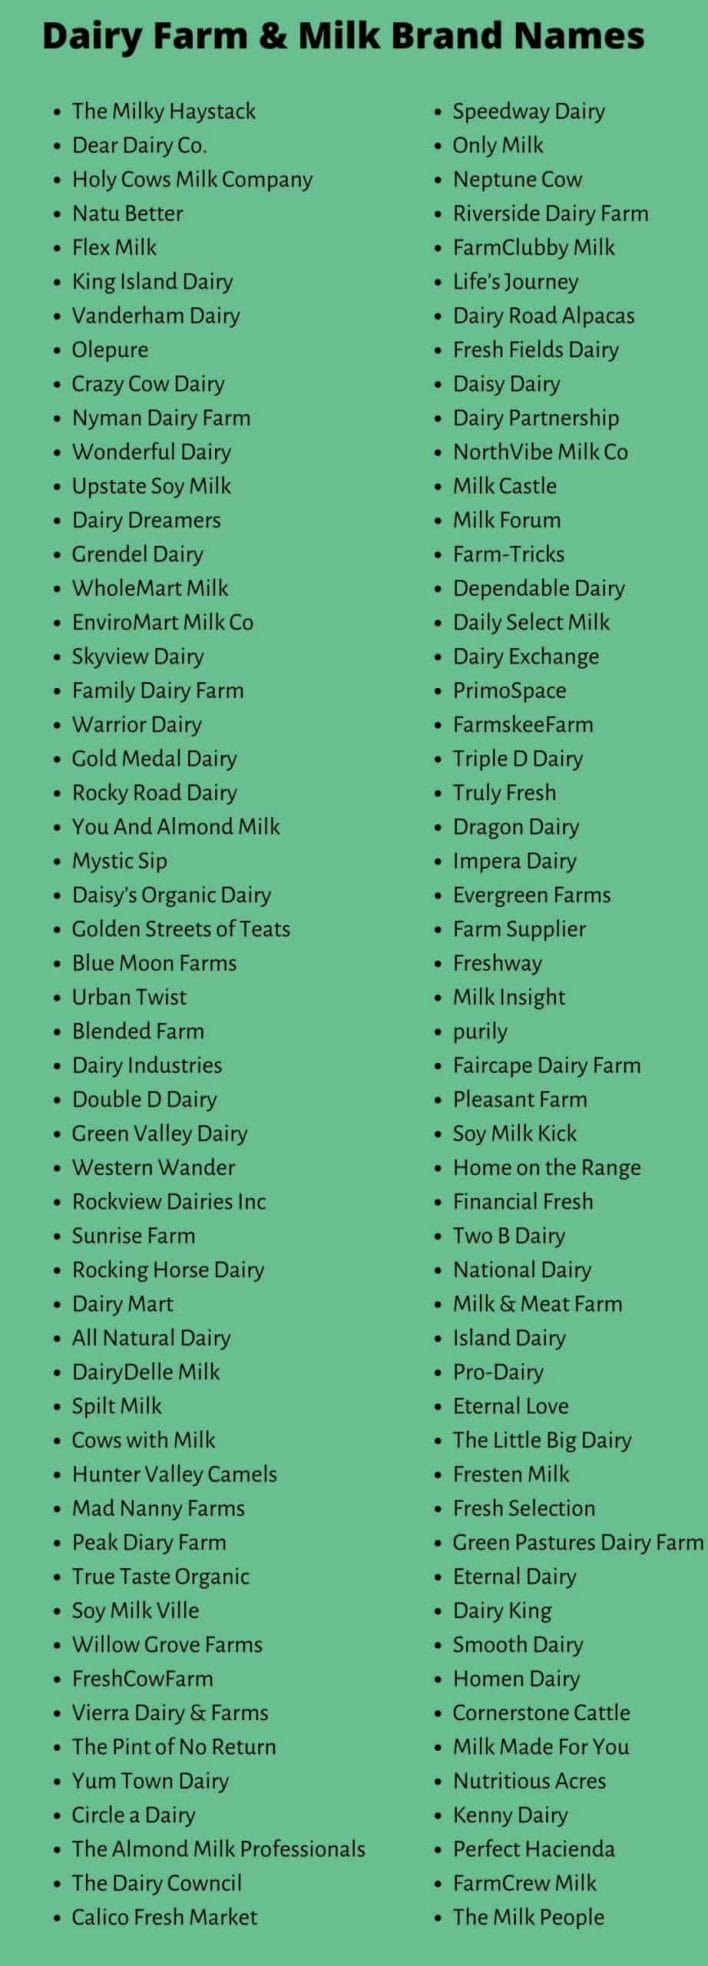 Dairy Farm Names